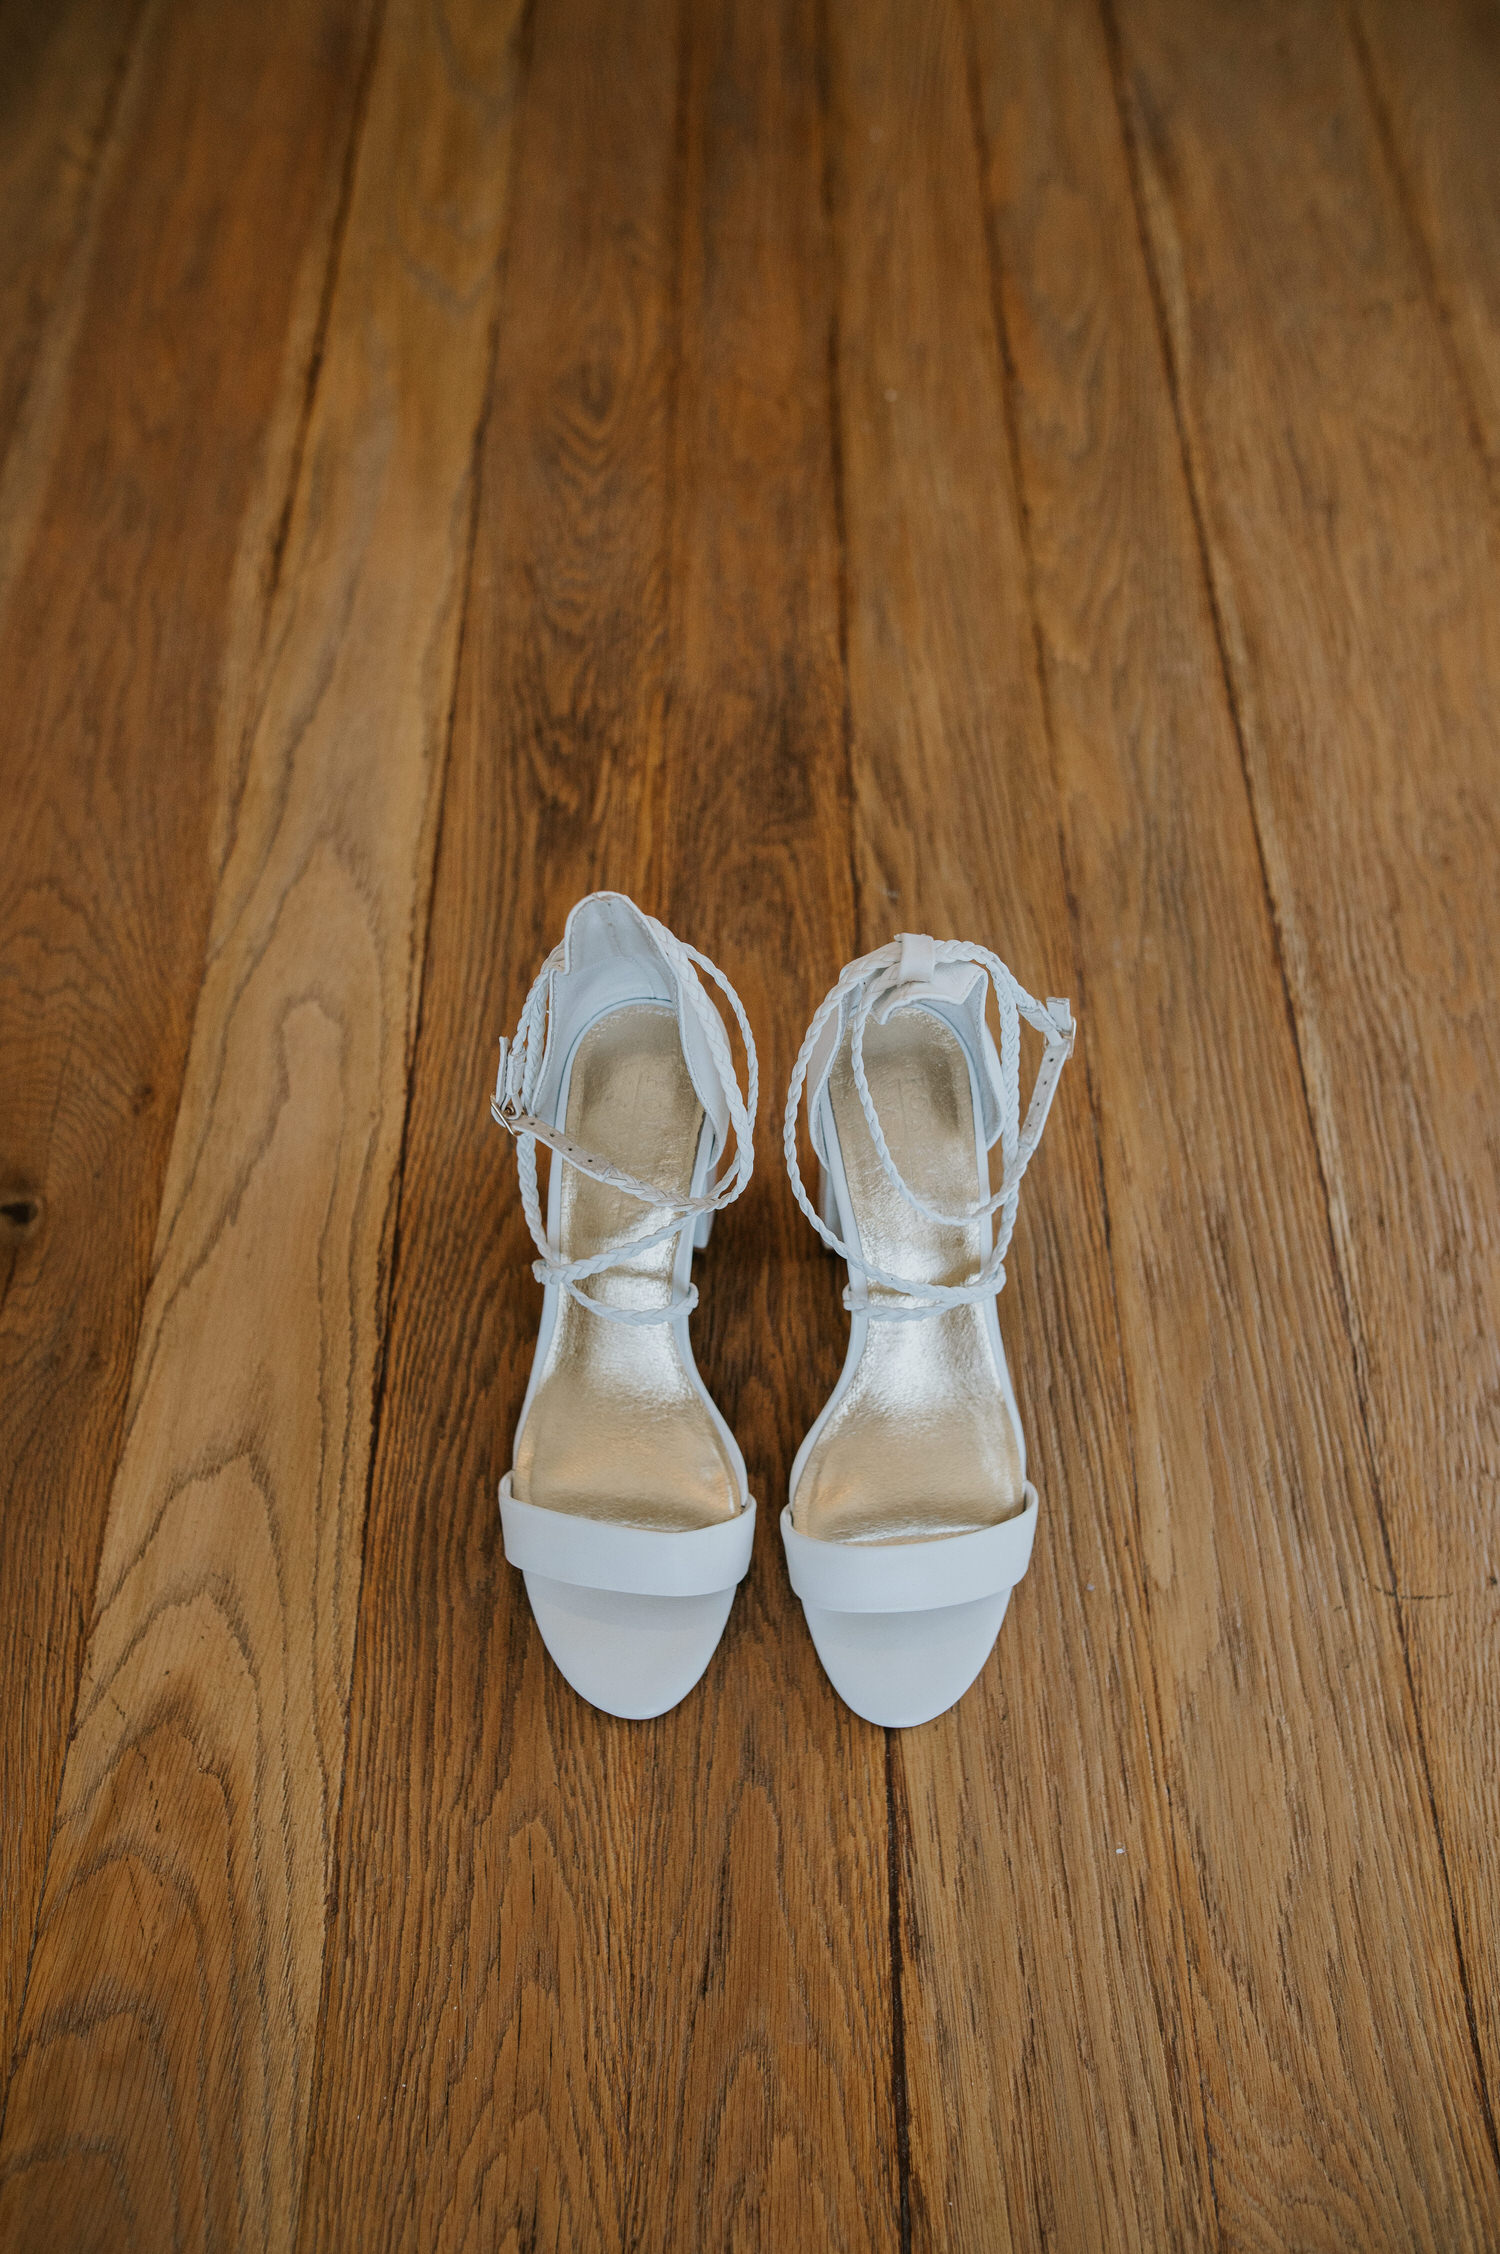 Mykonos wedding photographer: wedding sandals on the wooden table top.